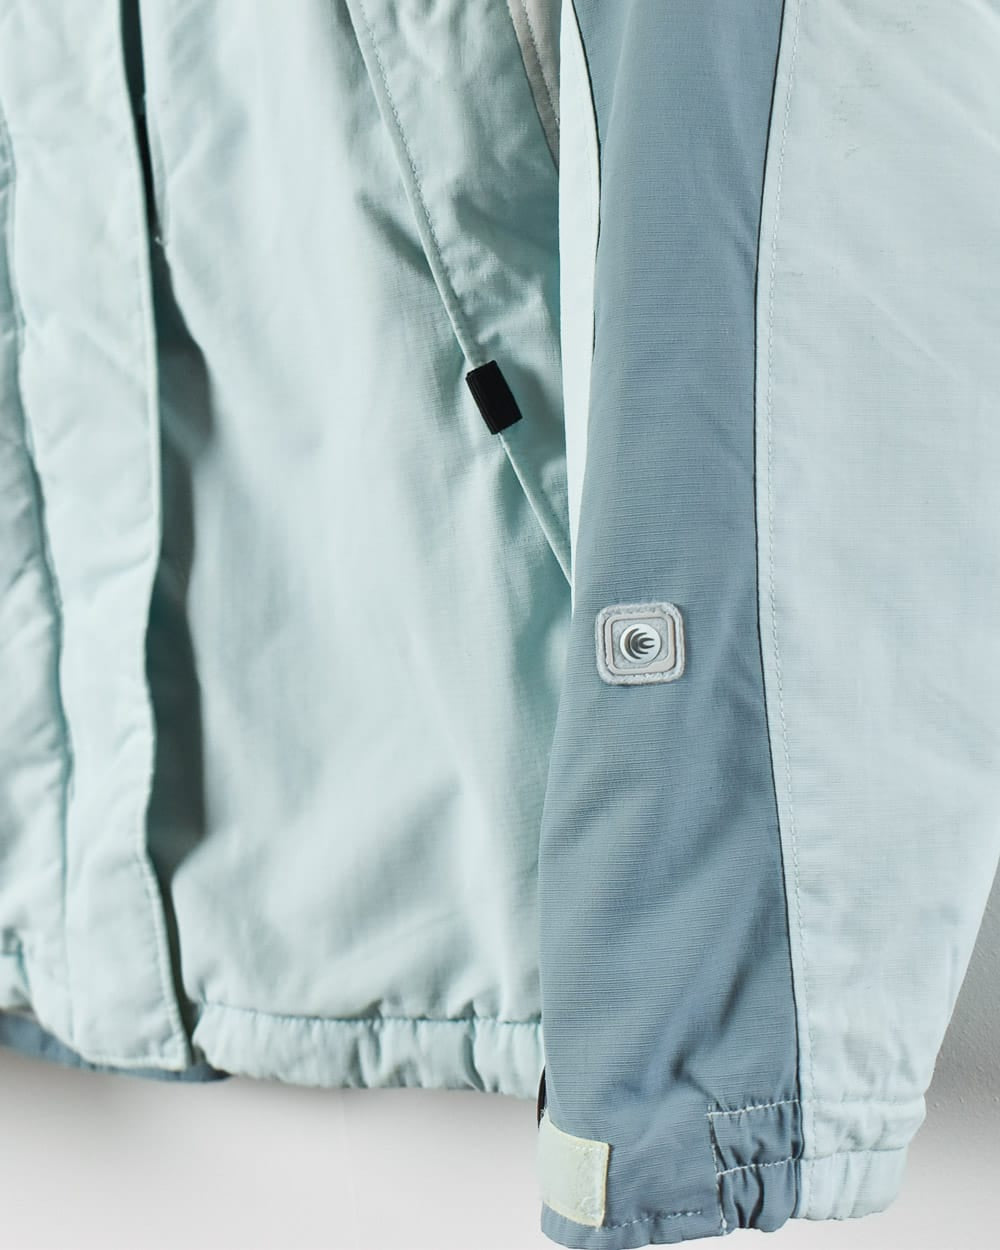 BabyBlue Columbia Fleece Lined Hooded Jacket - Medium Women's